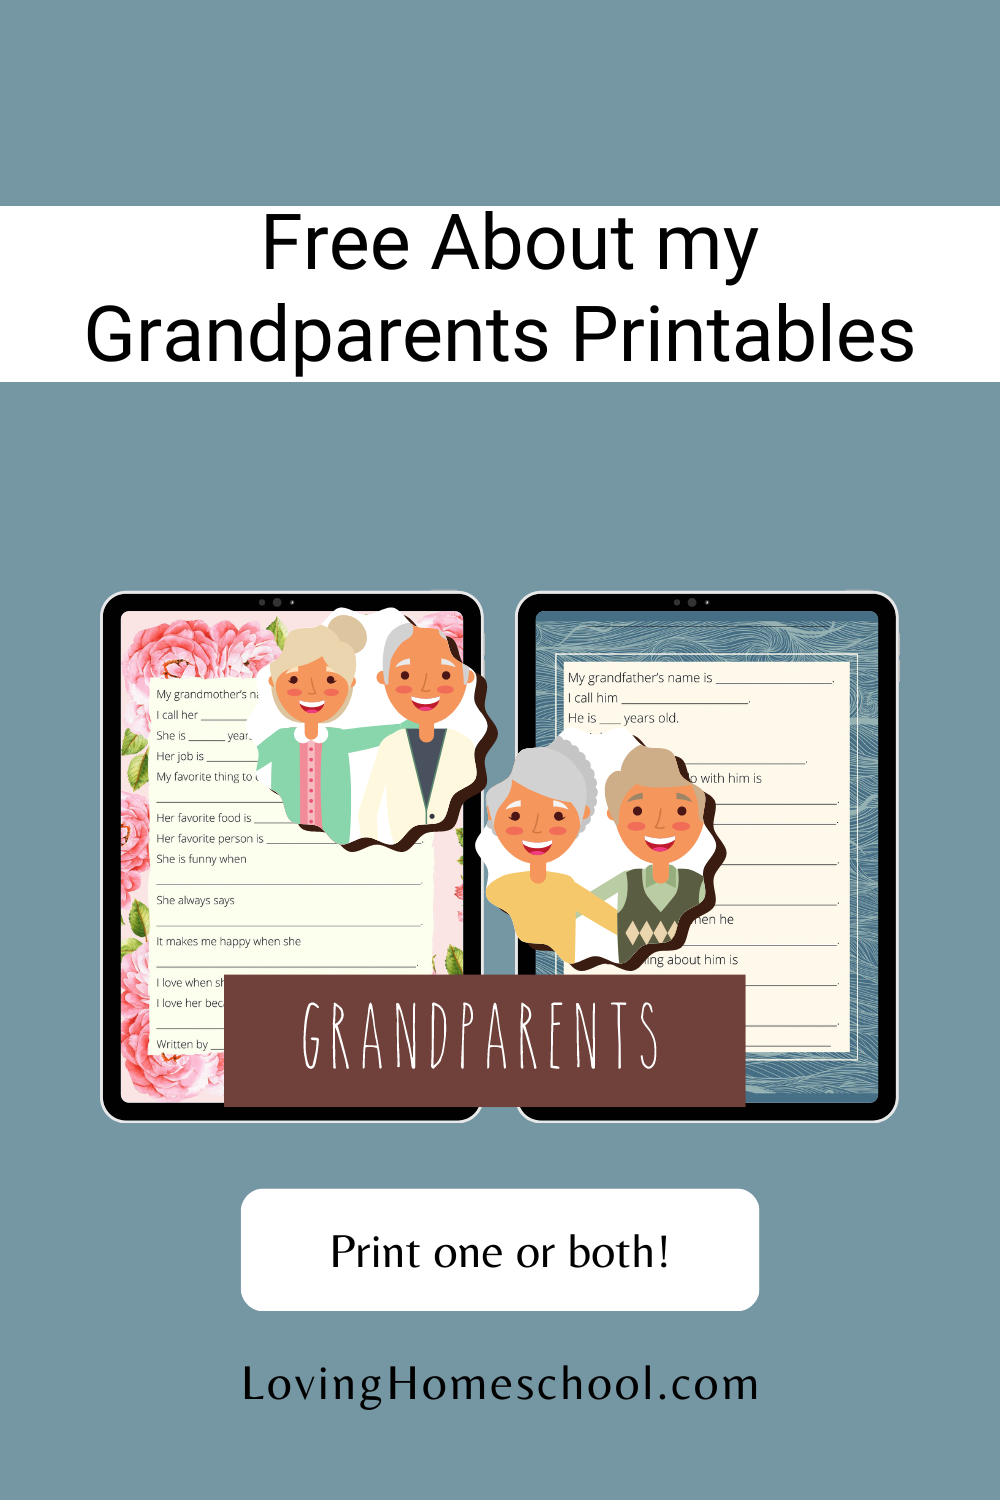 https://lovinghomeschool.com/wp-content/uploads/2022/08/About-my-Grandparents-Printables-Pinterest-Pin-1.png